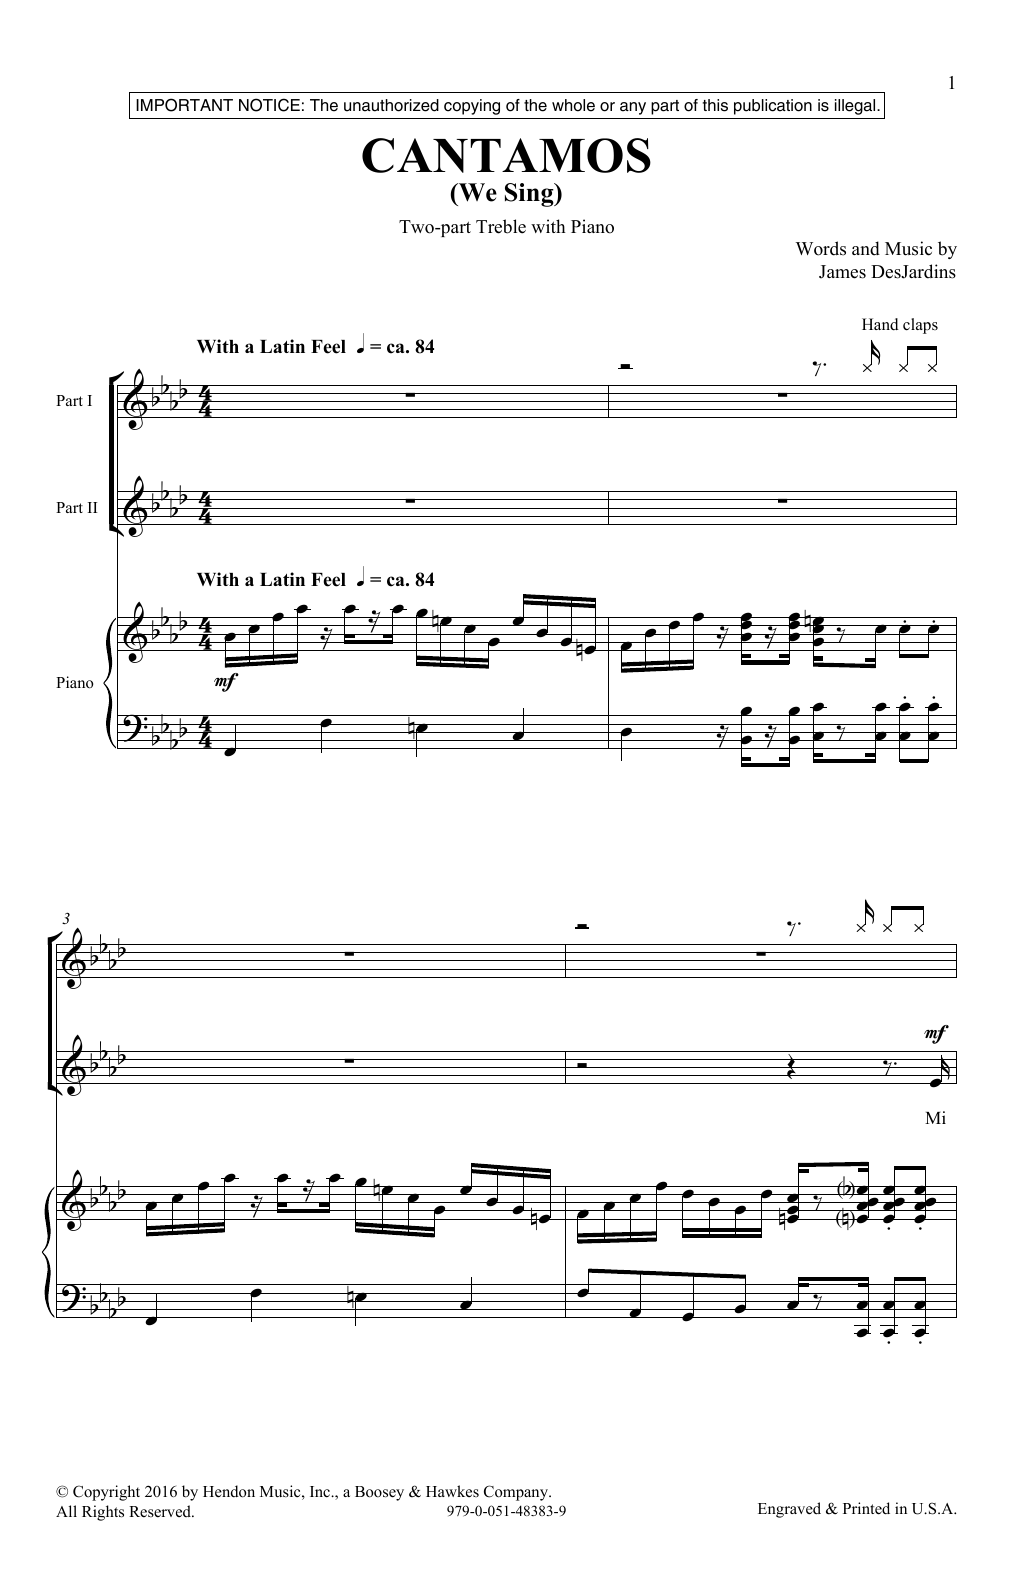 James DesJardins Cantamos sheet music notes and chords arranged for 2-Part Choir